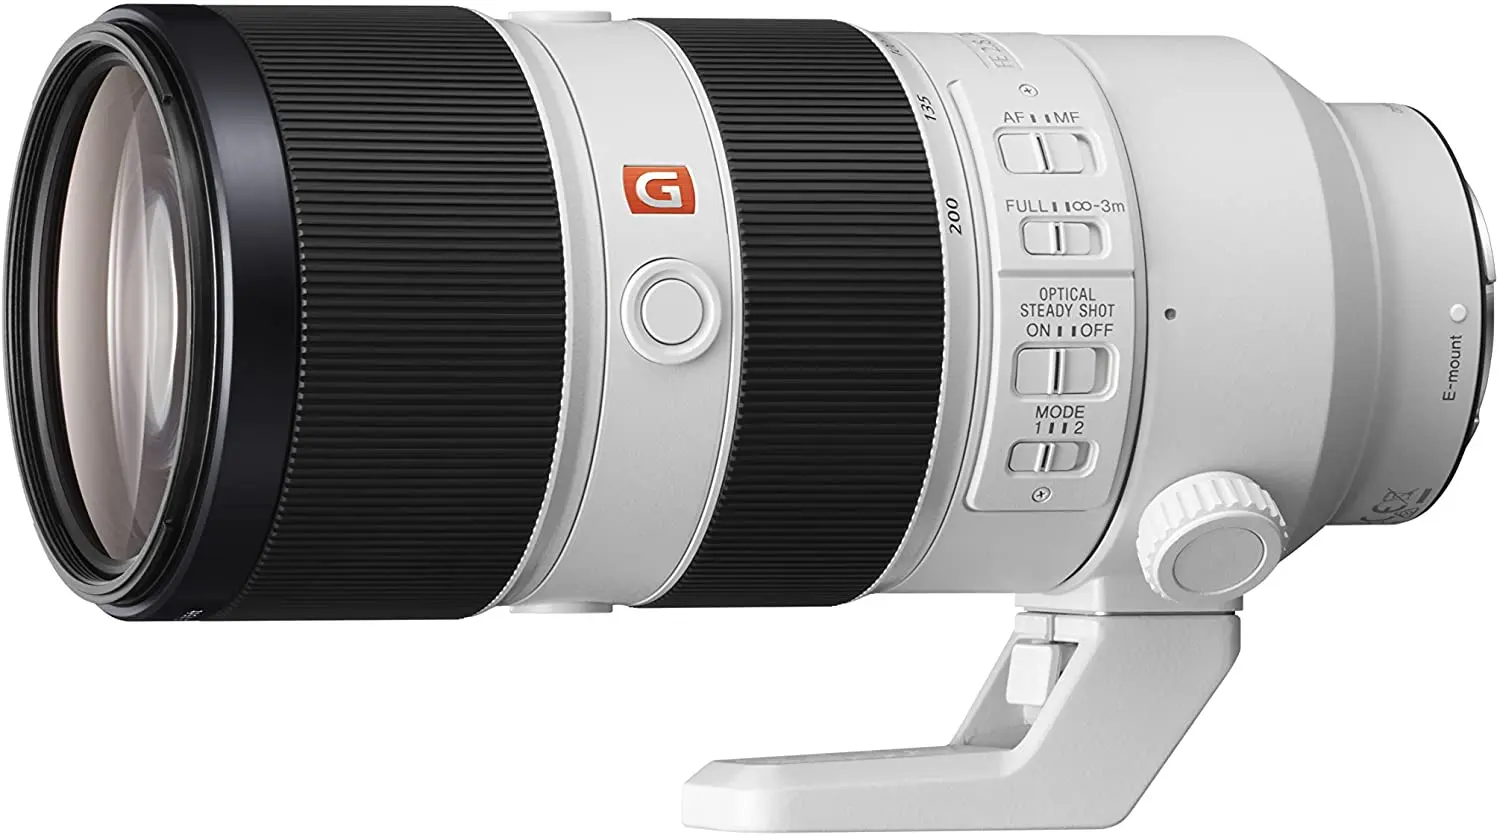 FE 70-200mm f/2.8 GM OSS Camera Lens